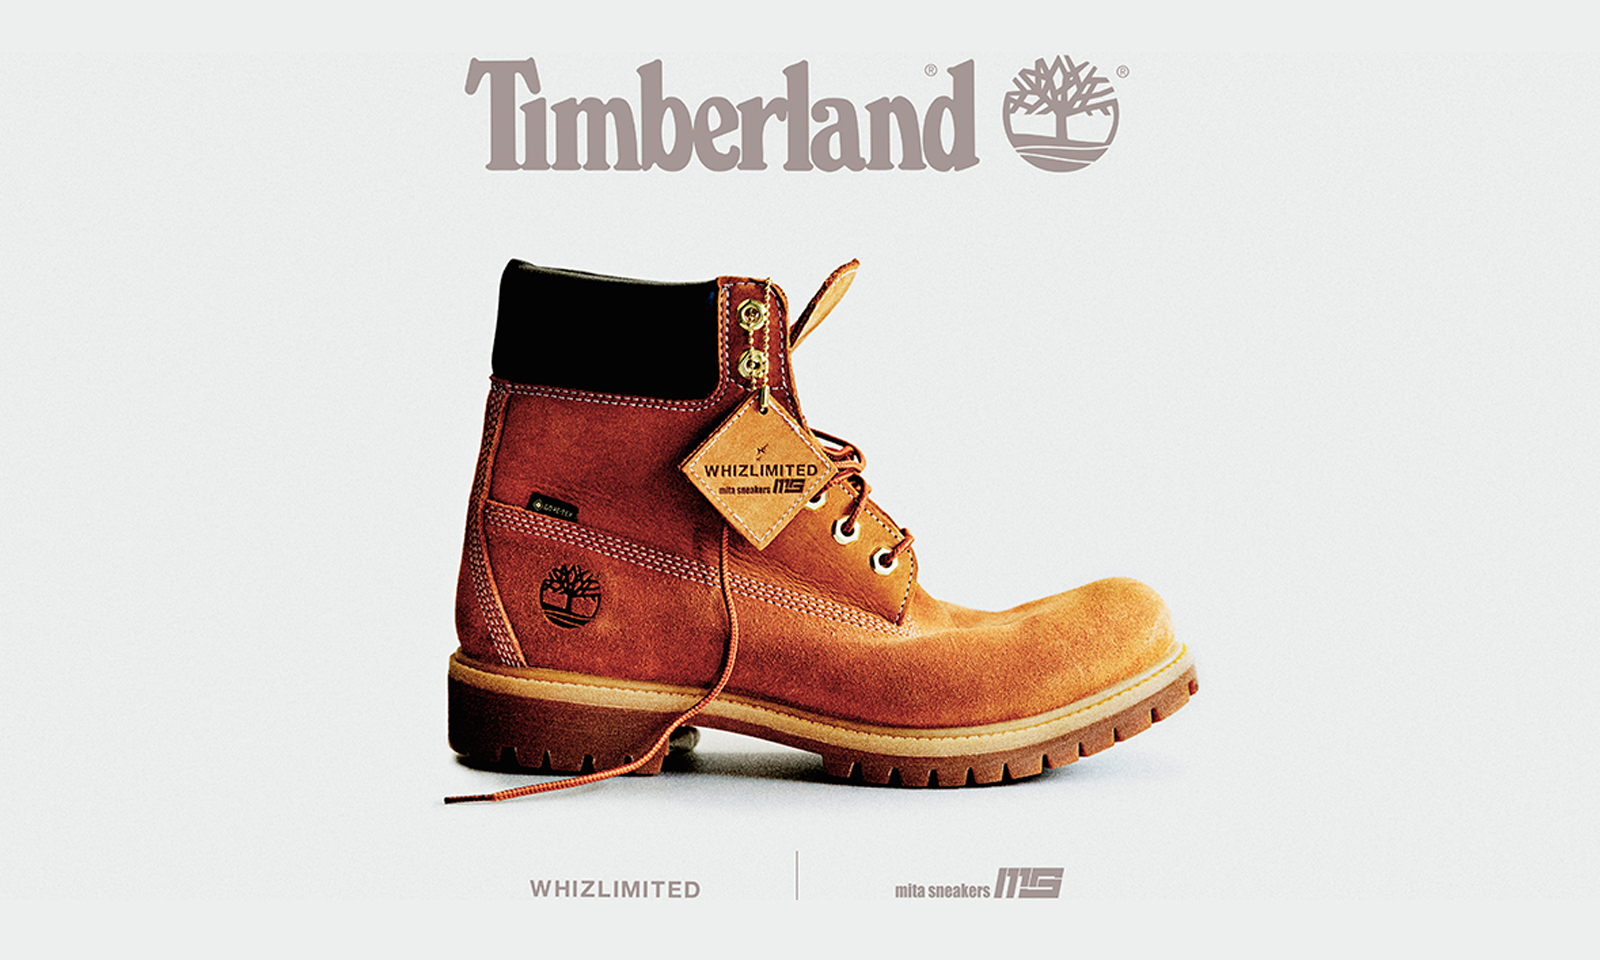 WHIZLIMITED x mita sneakers x Timberland 三方合作靴款登场